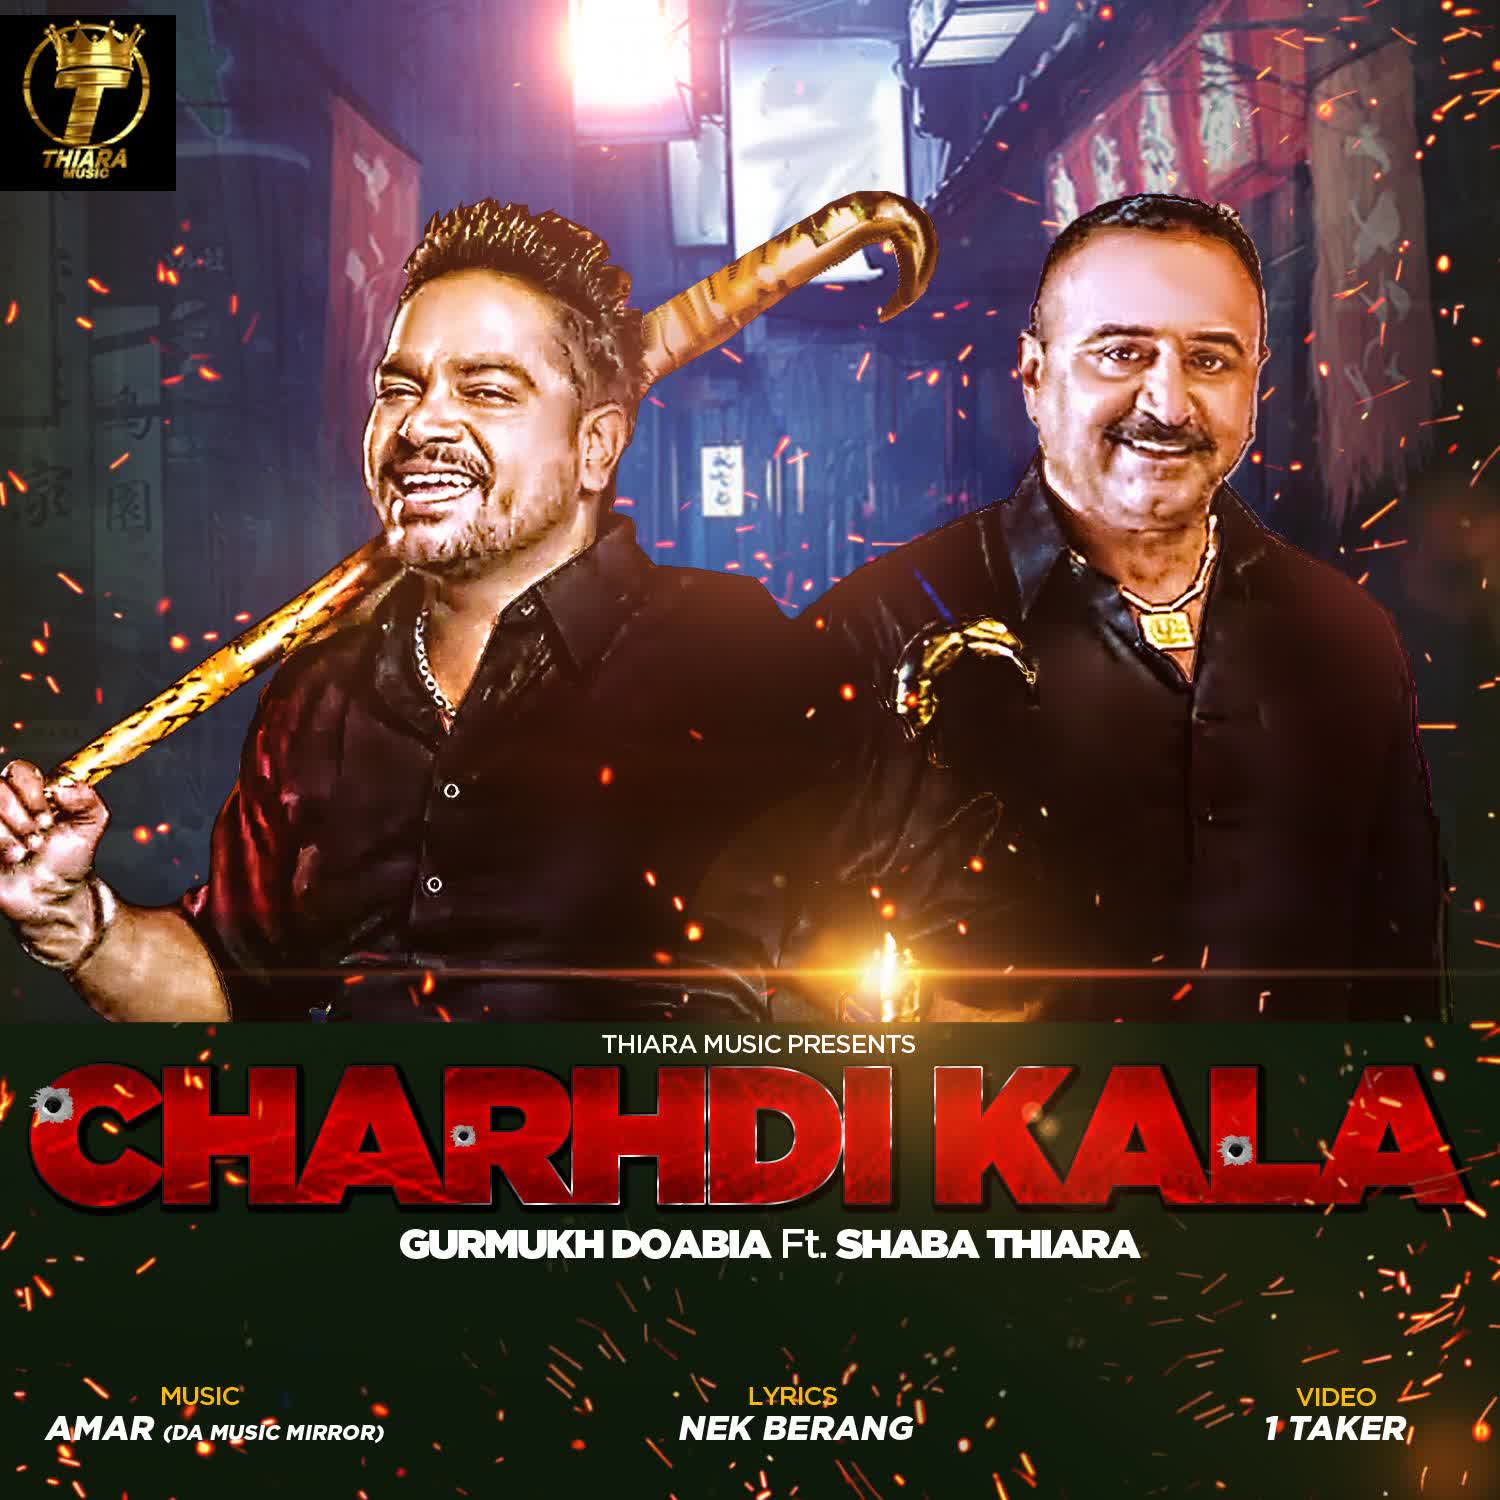 Charhdi Kala Gurmukh Doabia  Mp3 song download